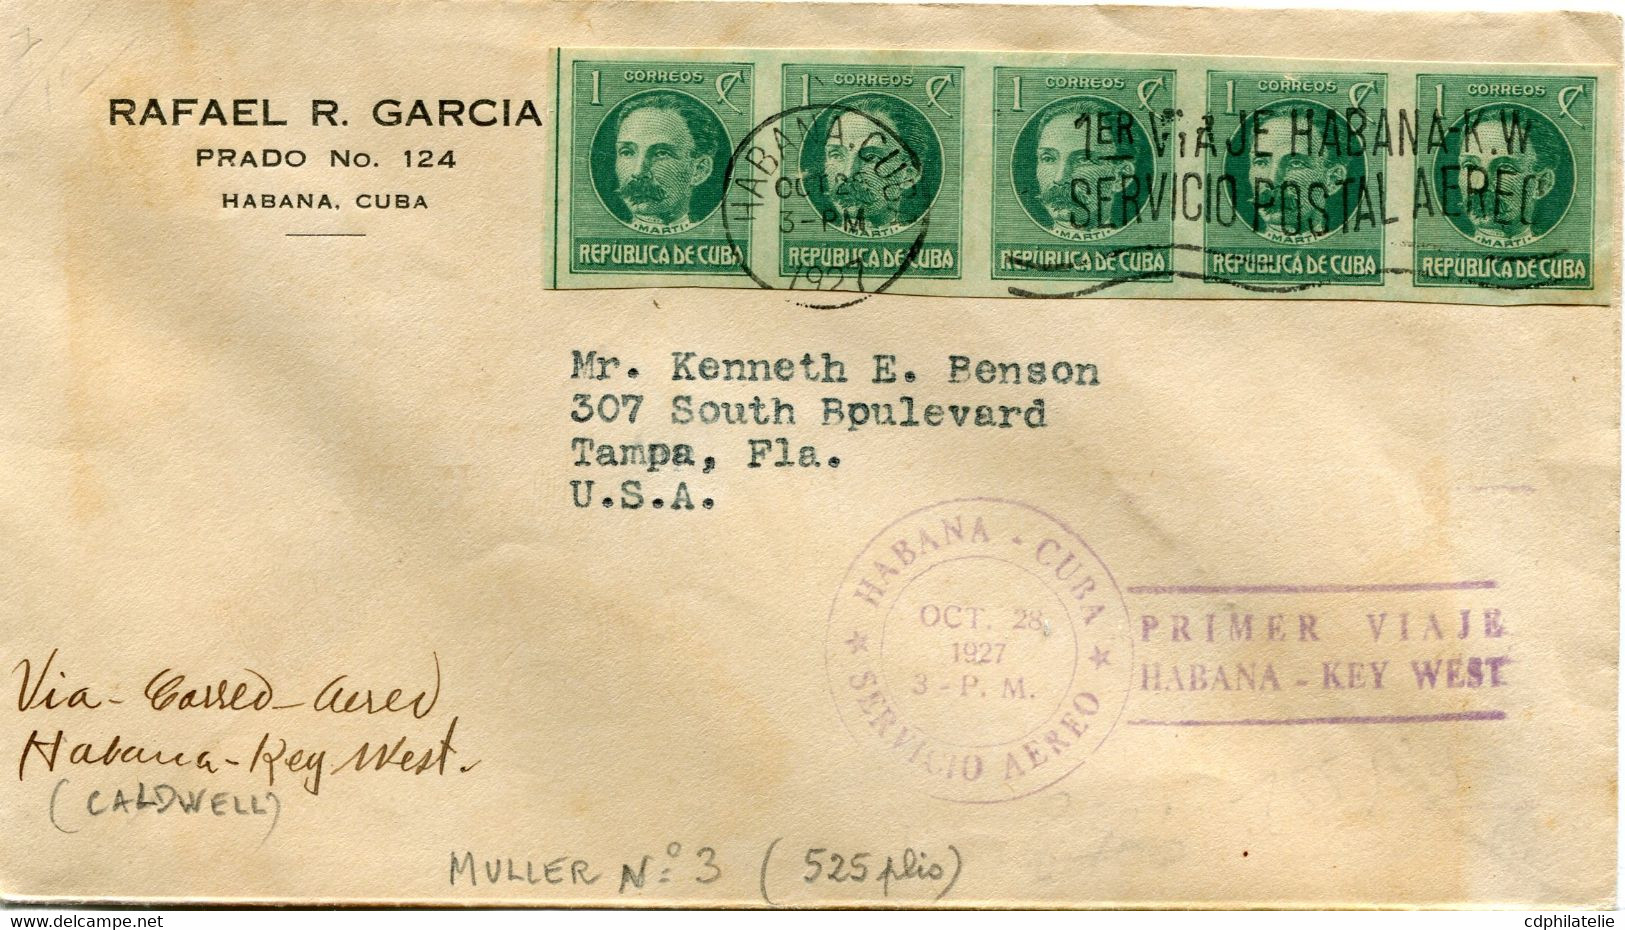 CUBA LETTRE AVEC CACHET " HABANA-CUBA OCT 28 1927 SERVICIO AEREO PRIMER VIAJE HABANA - KEY WEST "  ( 525 Plis ) - Poste Aérienne